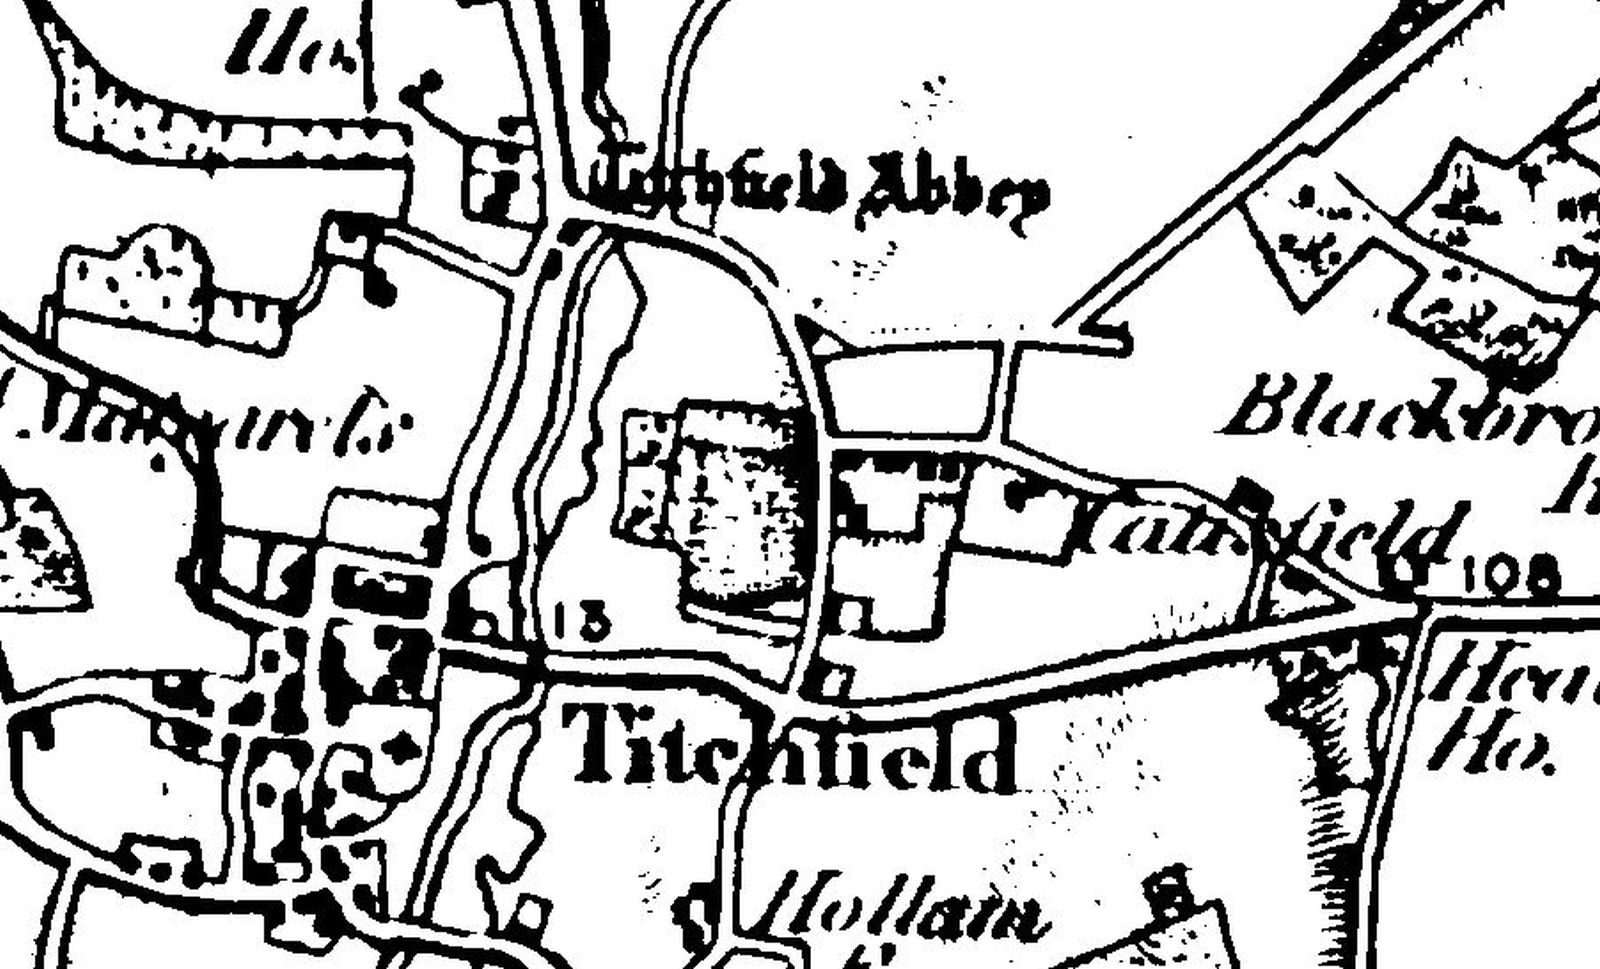 Catisfield 1864 map (277K)